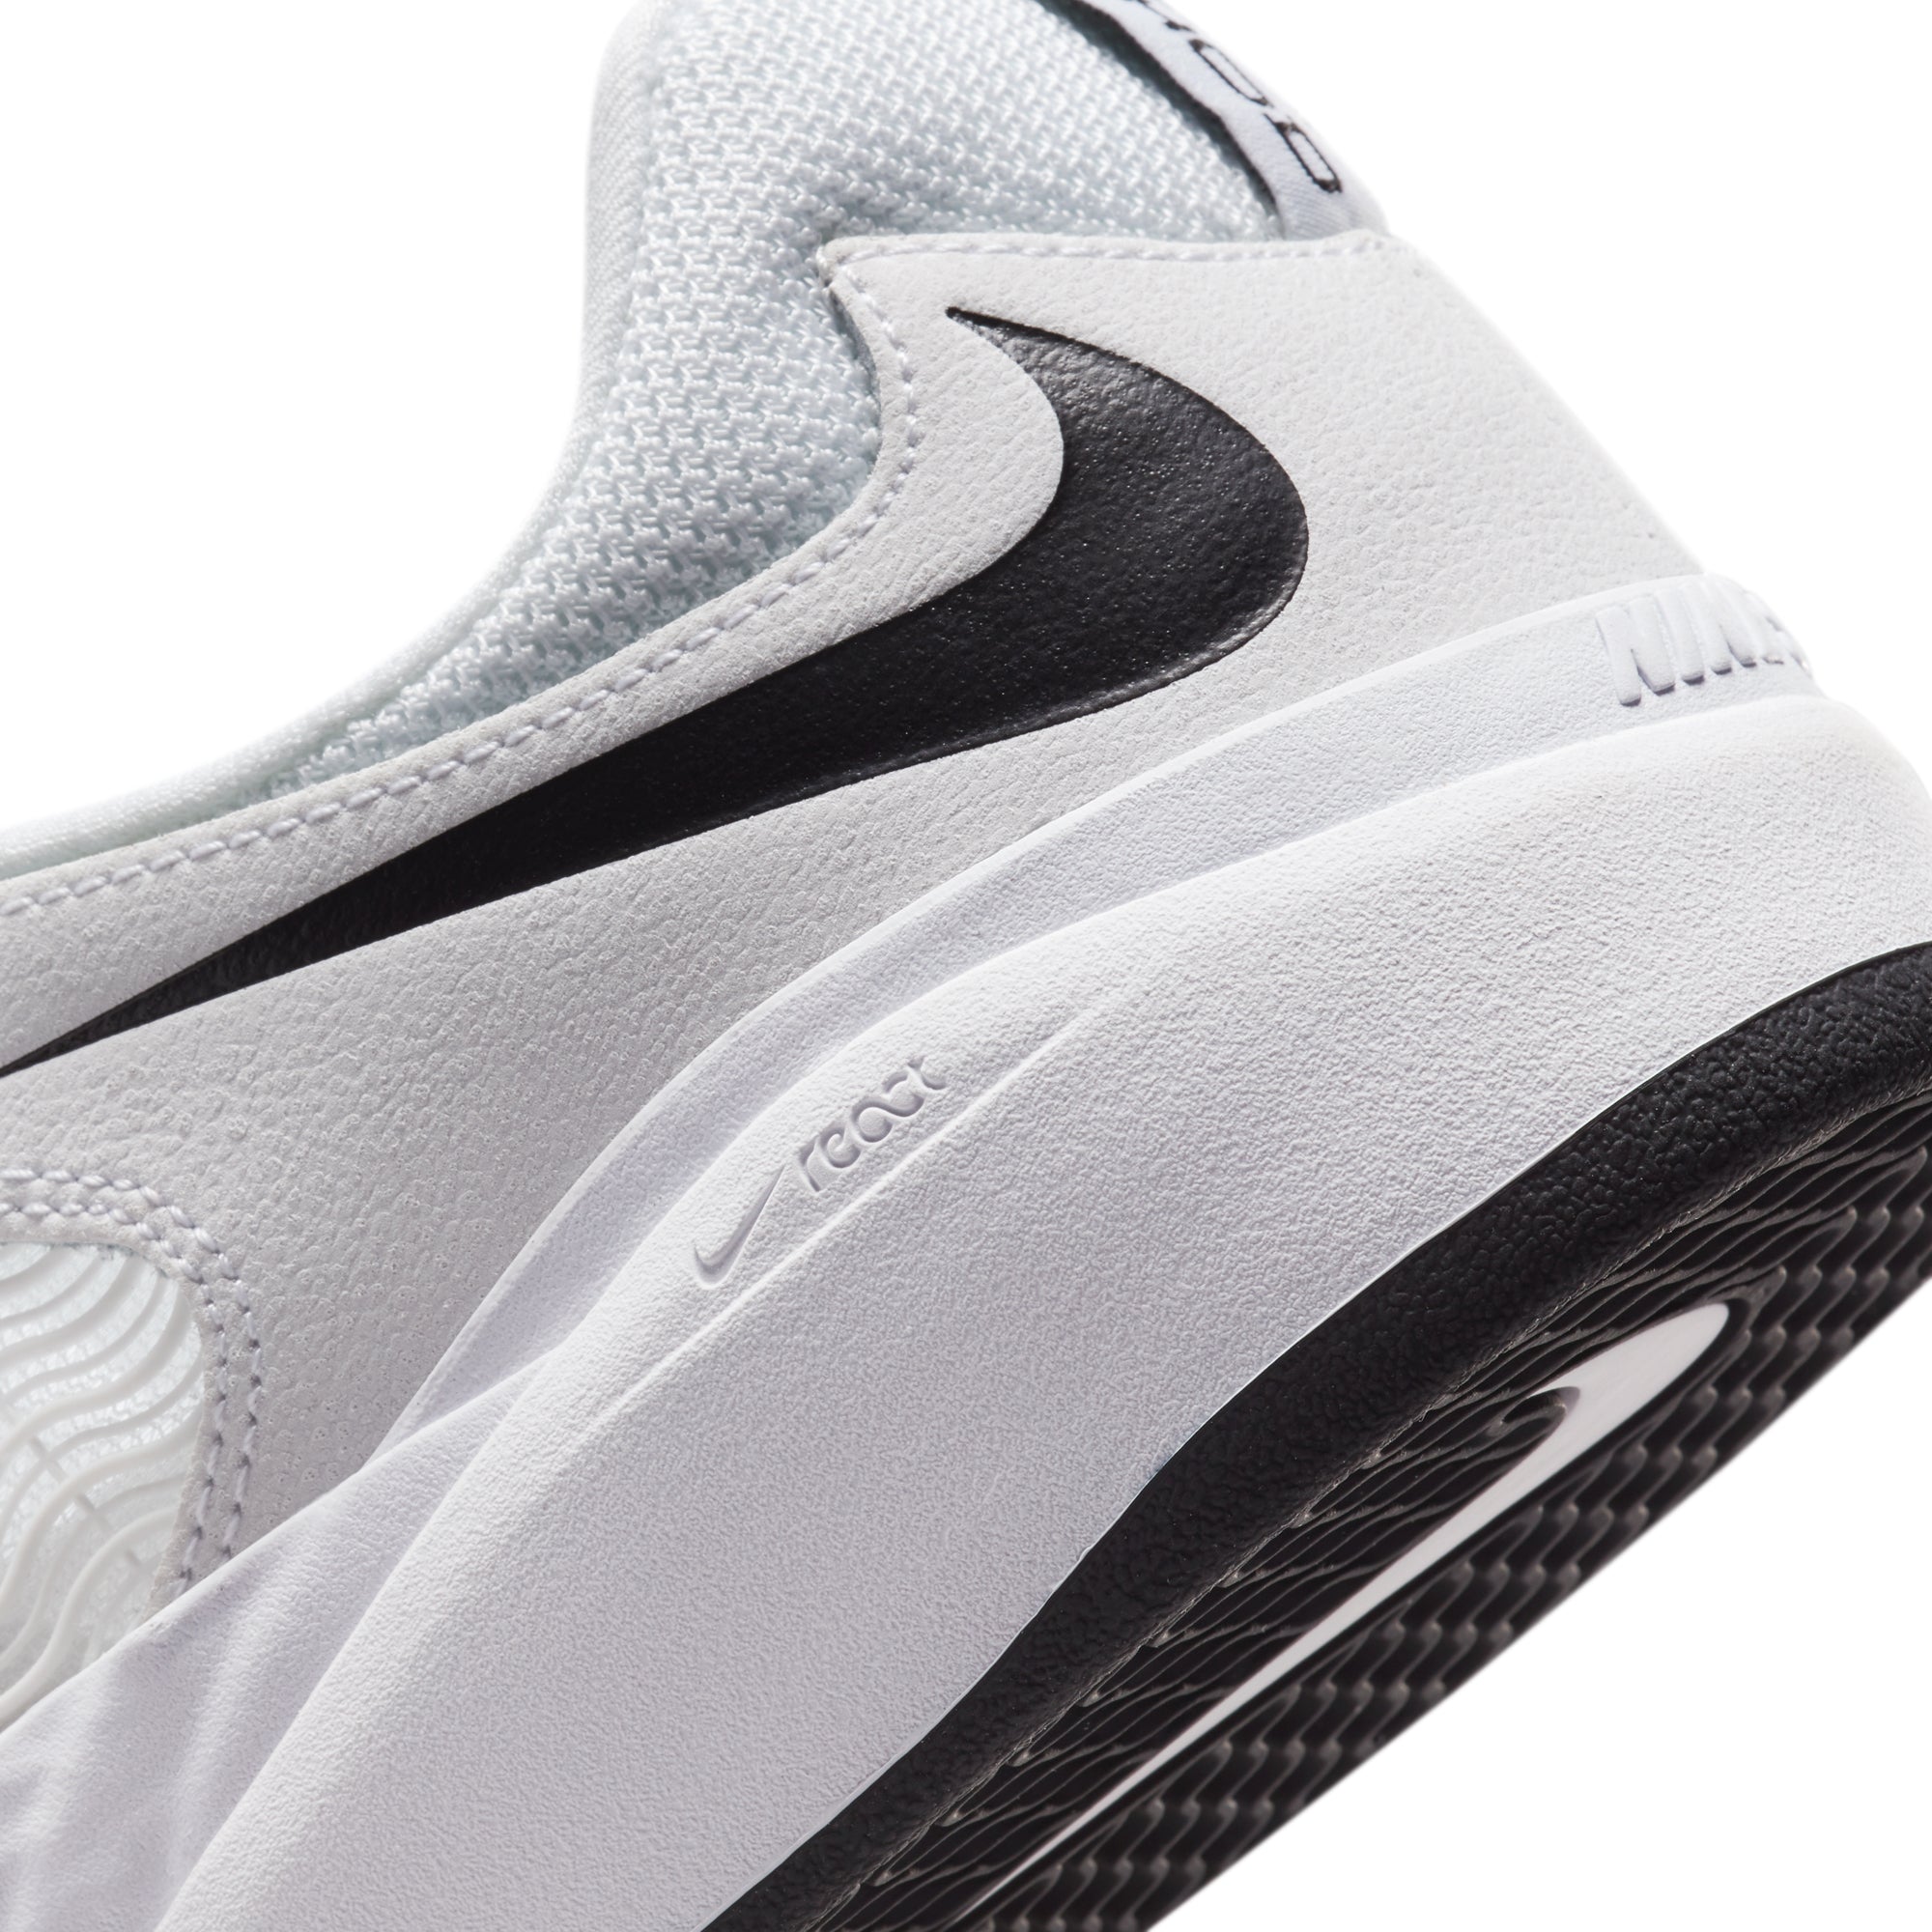 Nike SB Ishod Premium Pro Shoe - White/Black-White-Black